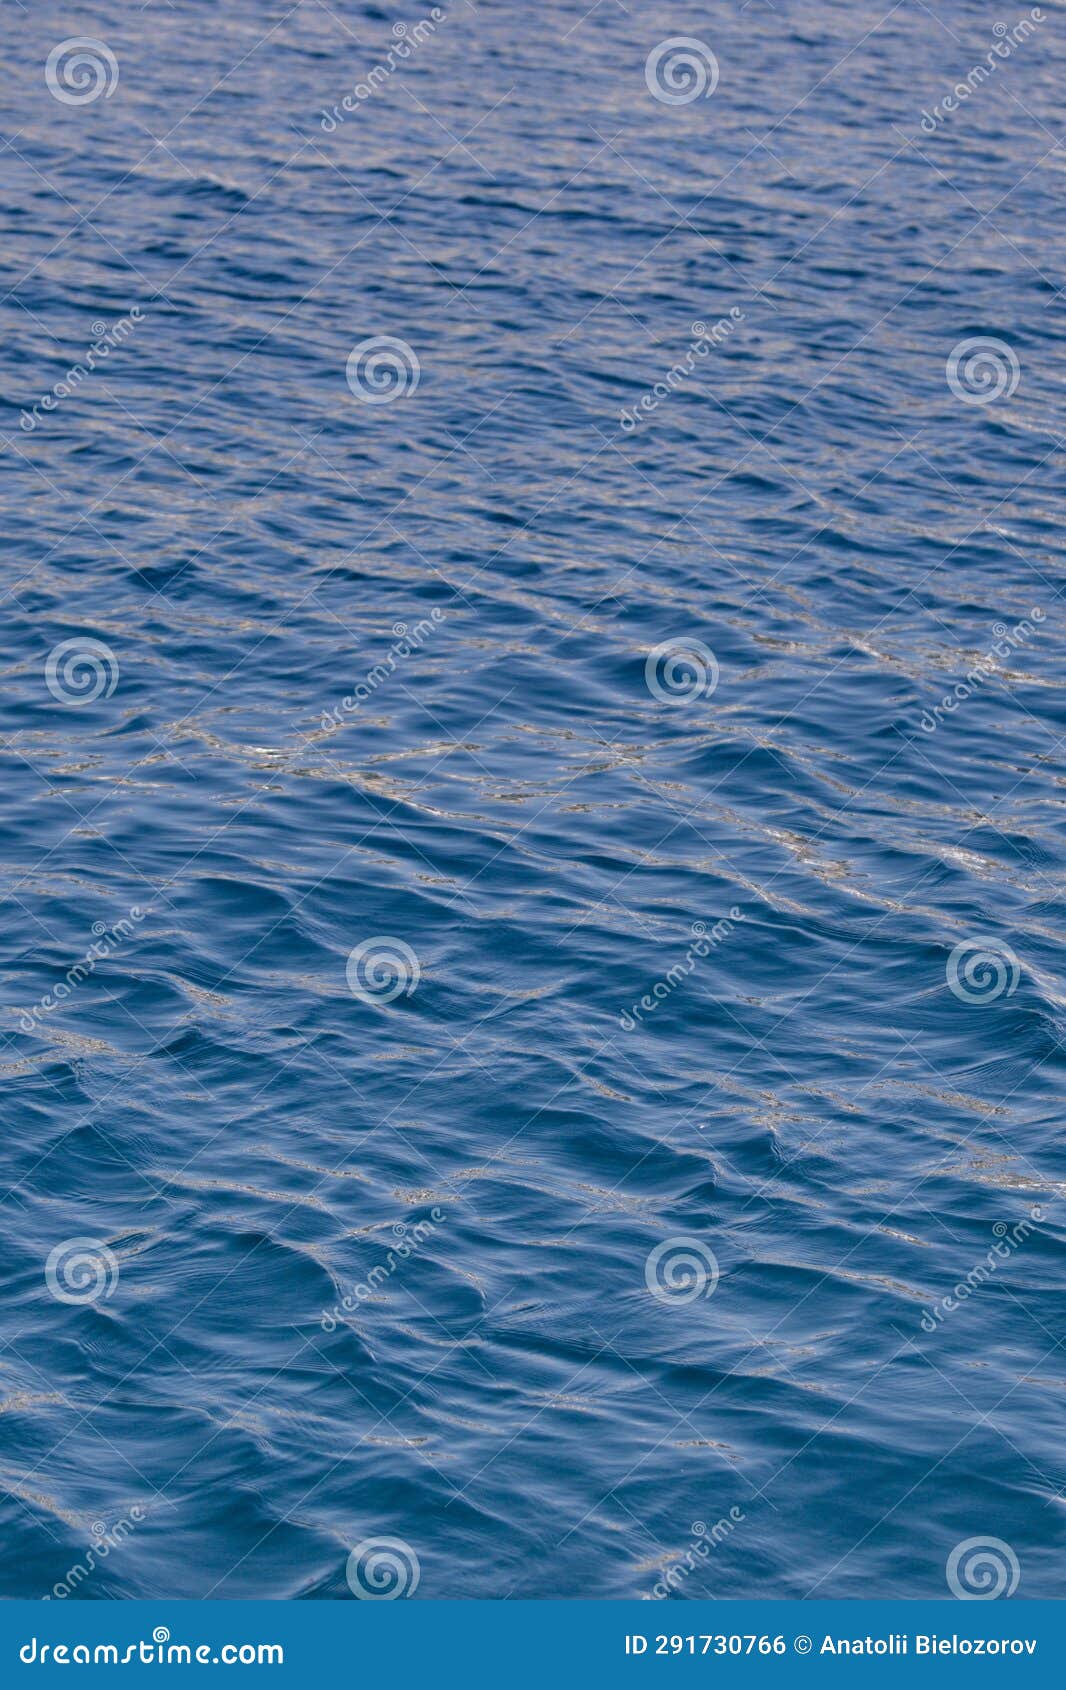 foto de ondas marinas para diseÃ±o y fondo